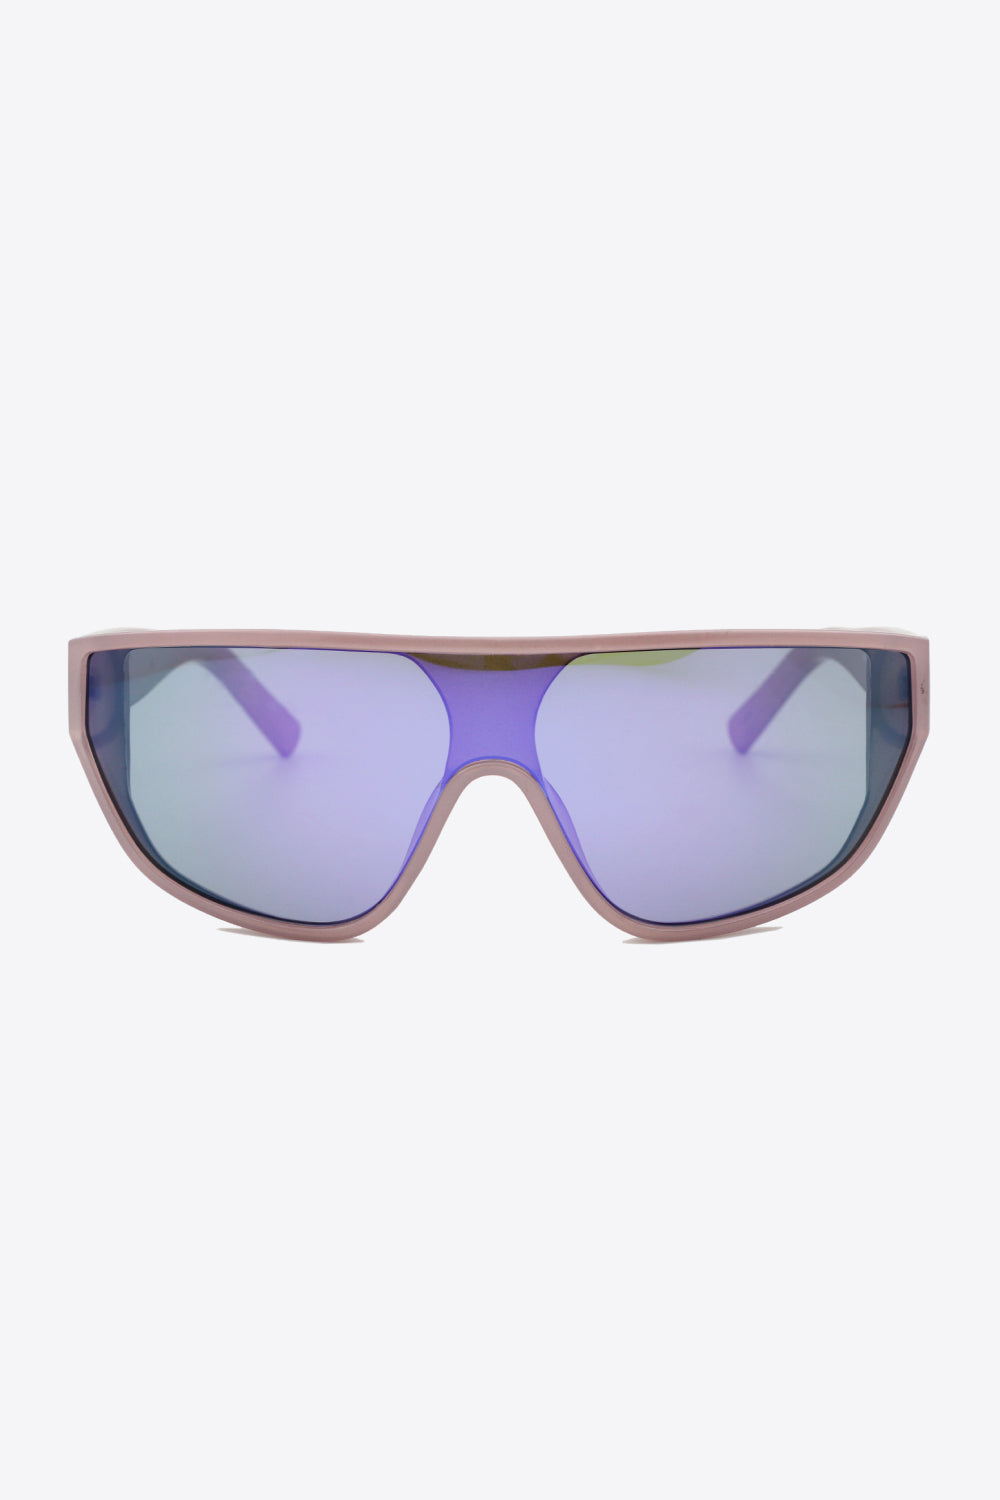 UV400 Polycarbonate Wayfarer Sunglasses - Online Only